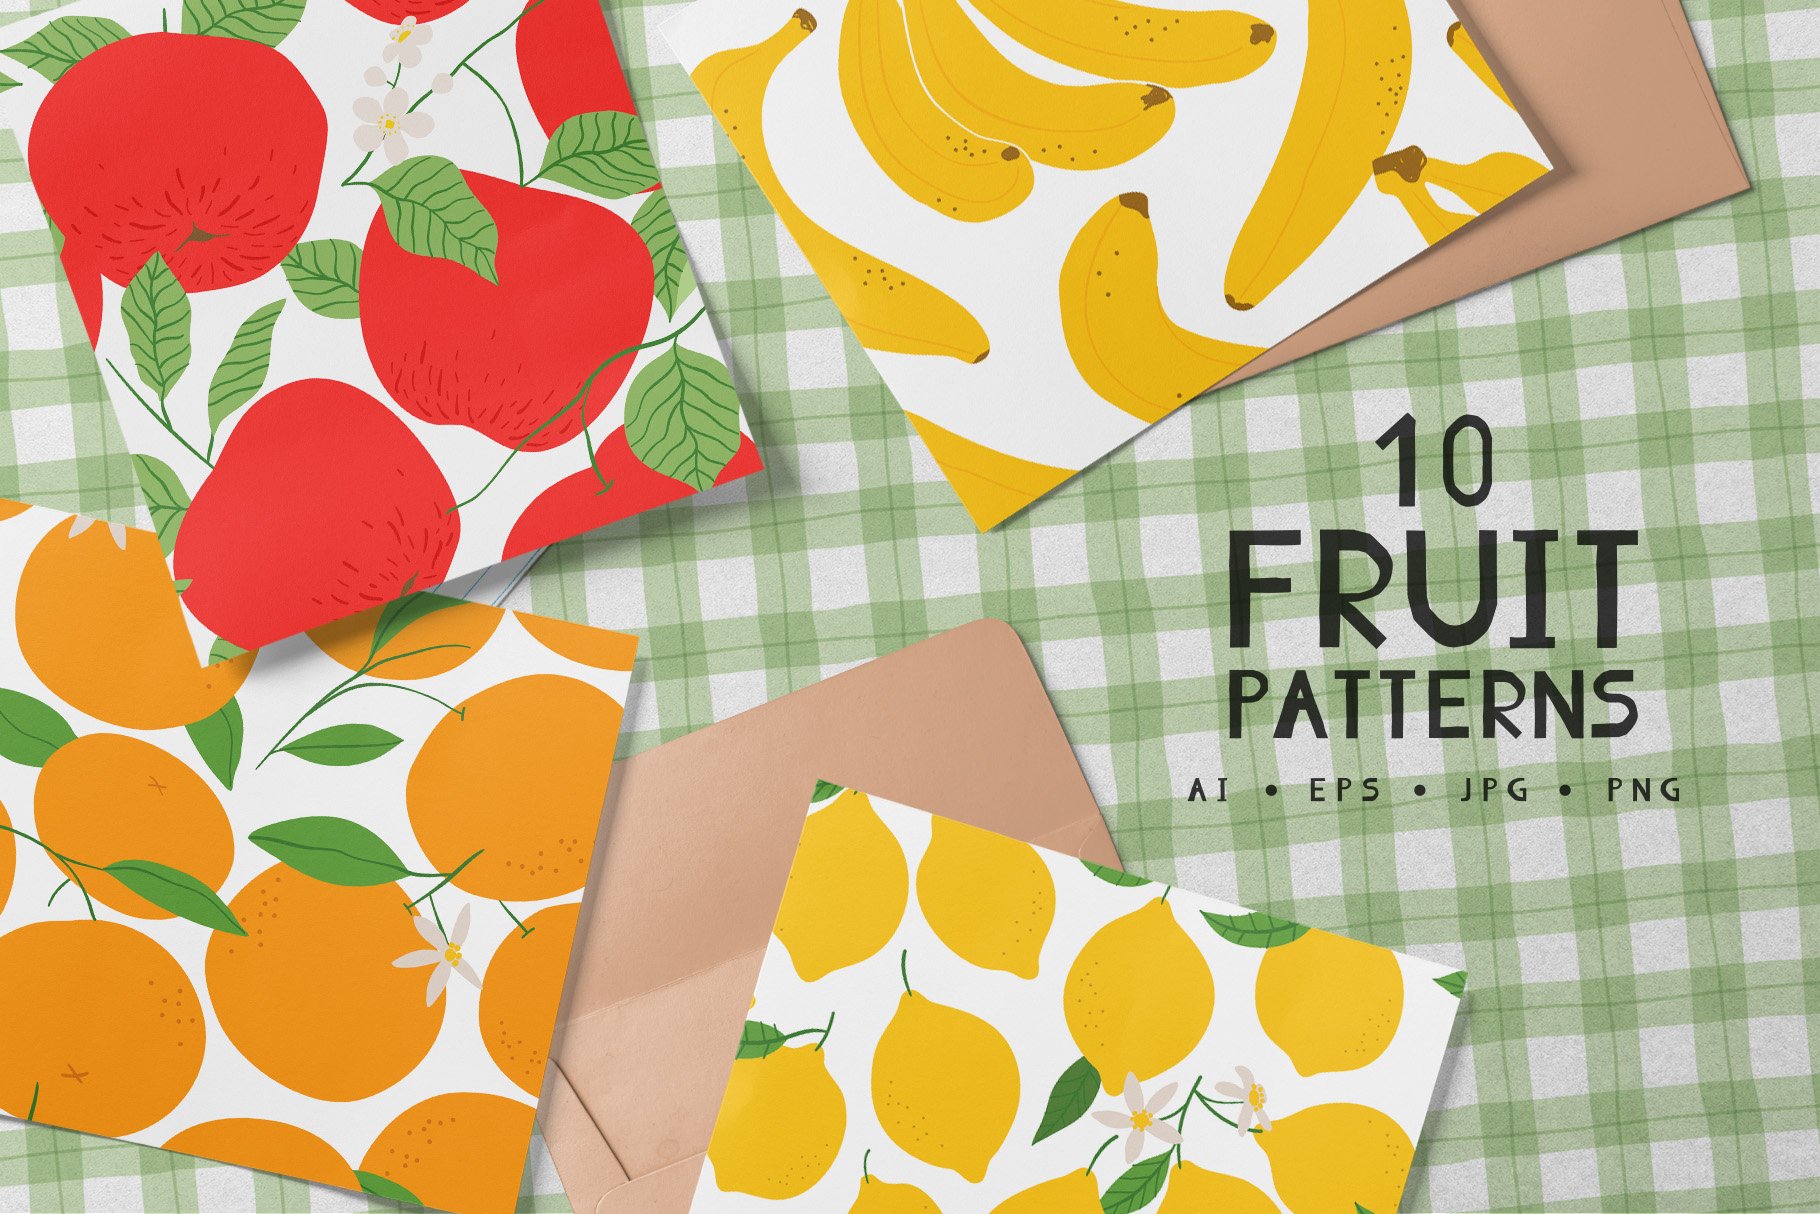 Fruit Pattern Set cover image.